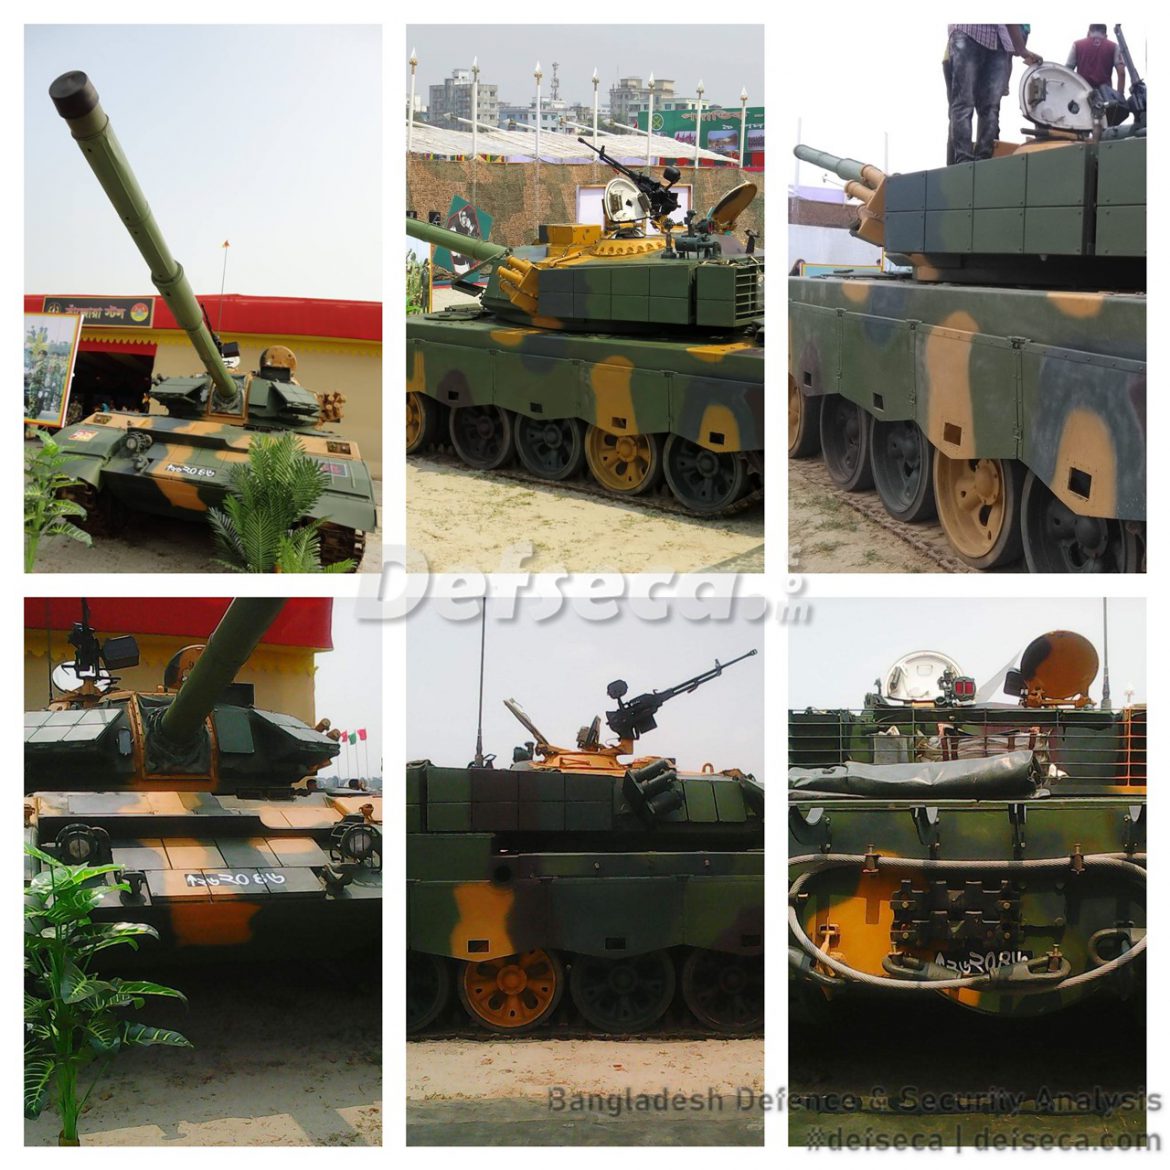 Army breathes new life into Type 59K tanks with Durjoy upgrade